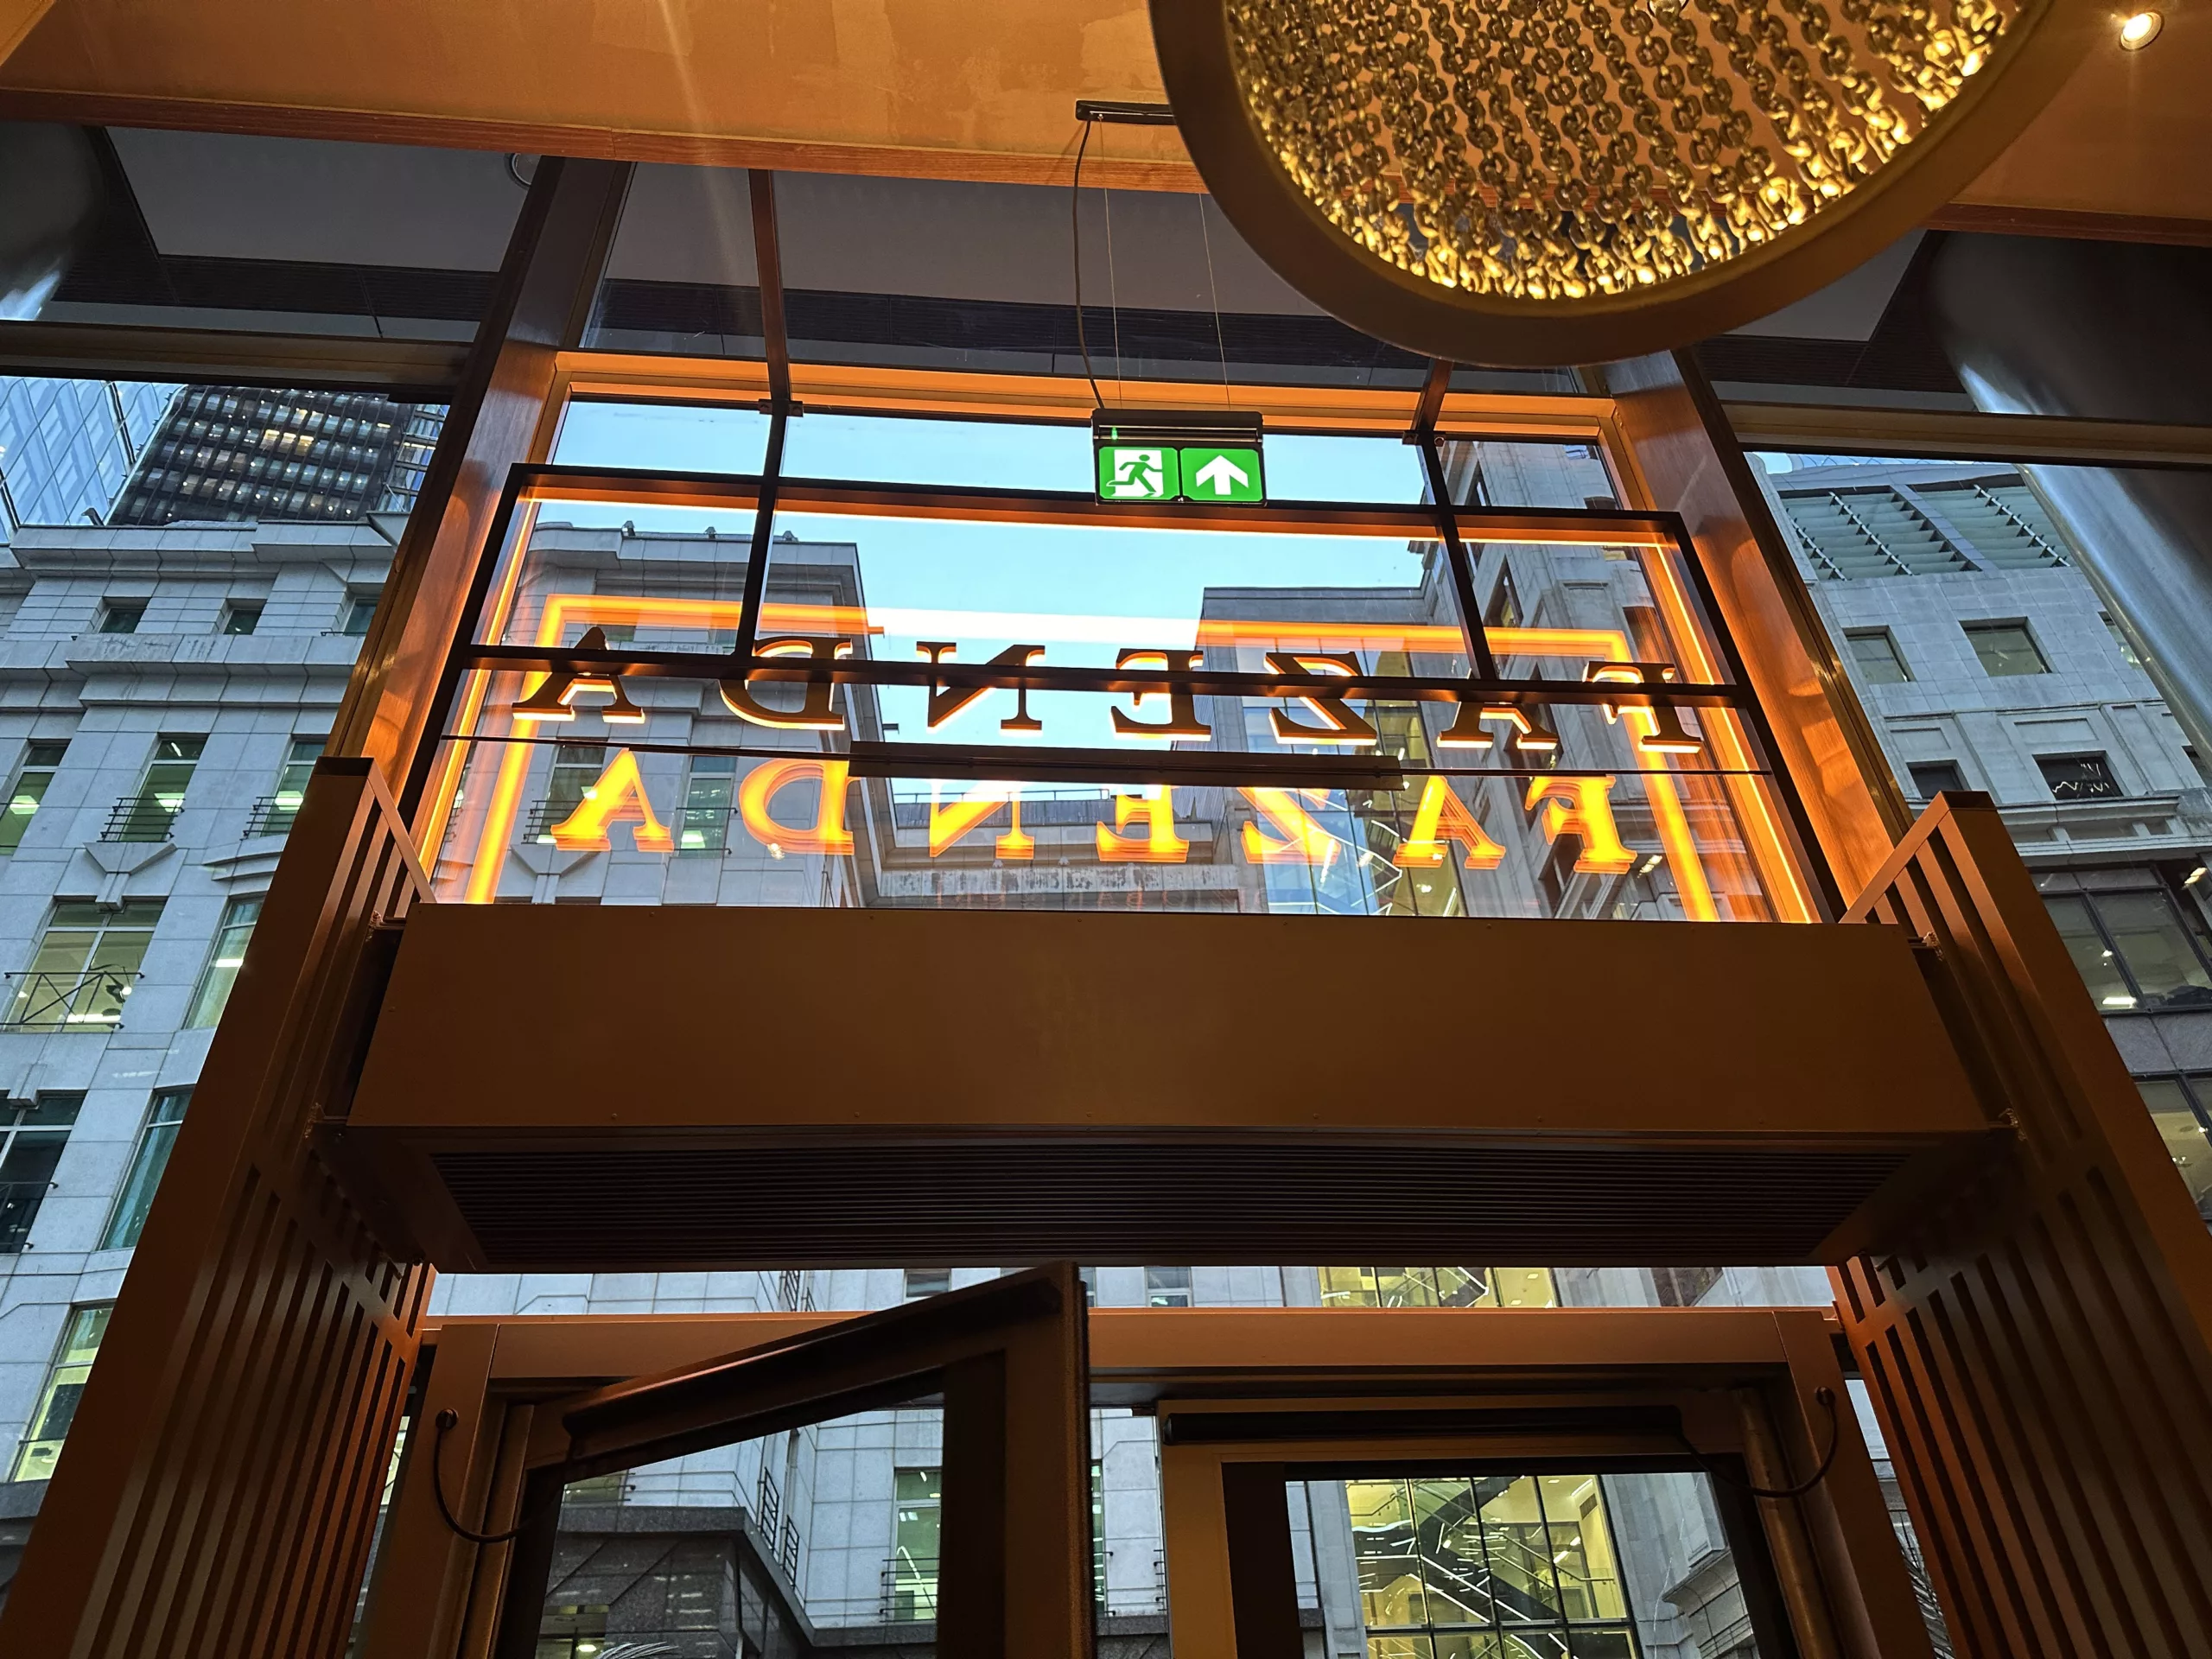 Fazenda restaurant | Bespoke signage lighting | The Light Lab | brand lighting